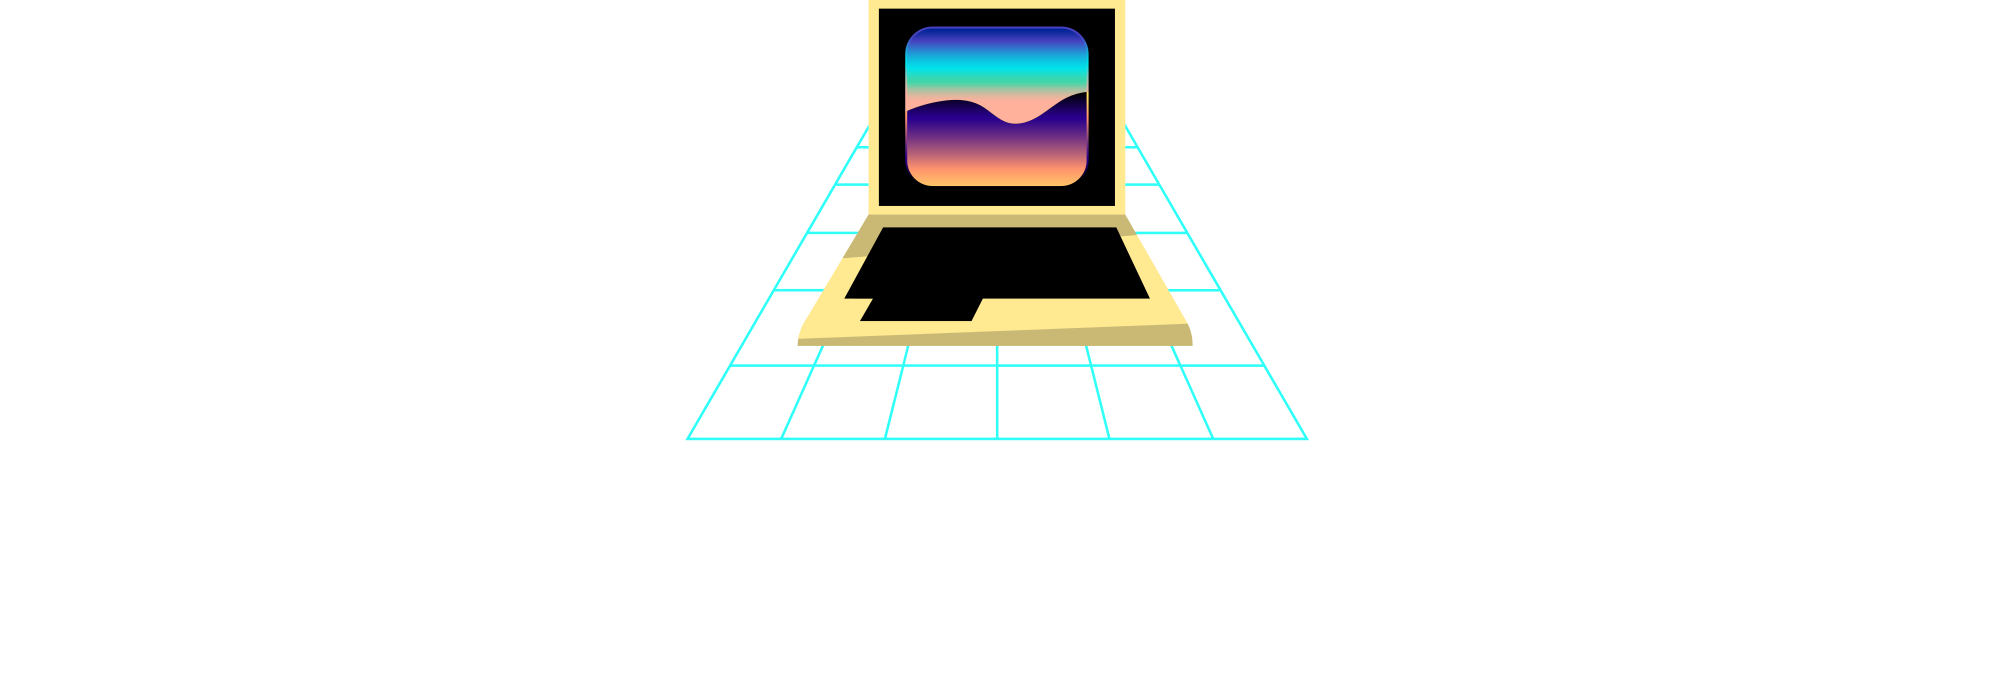 Laptop Monitor Extender Reviews